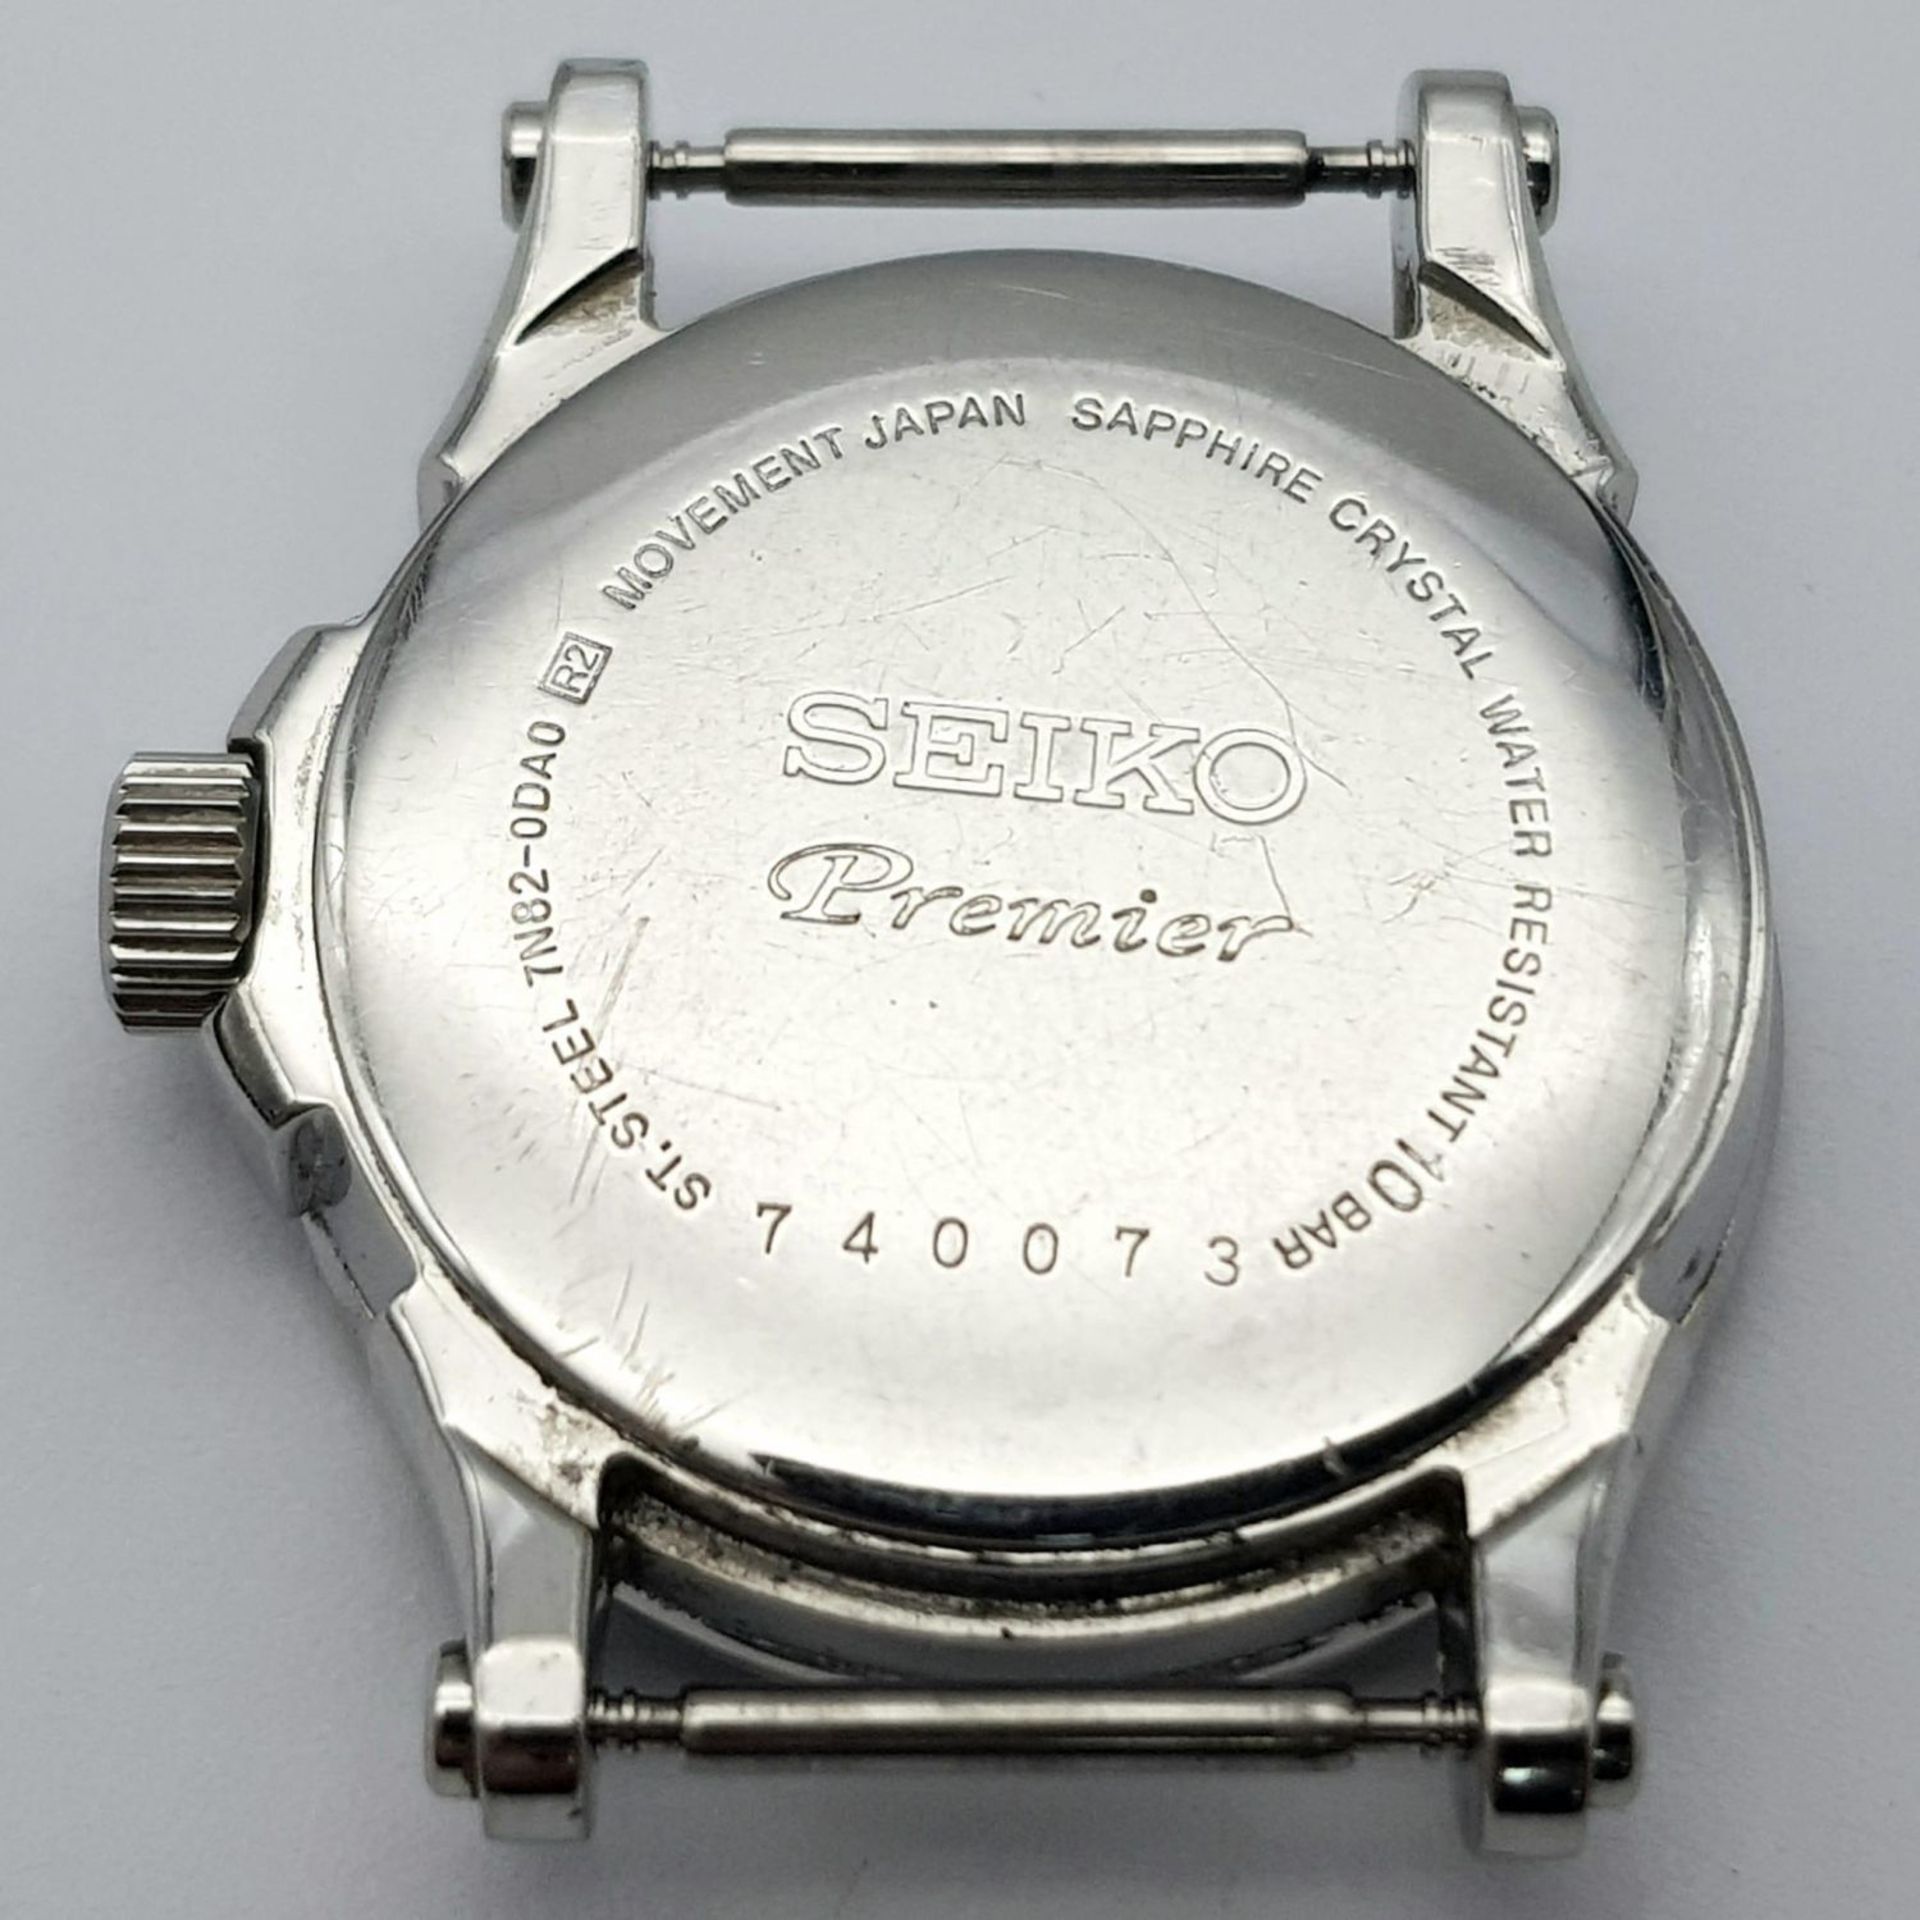 A Seiko Premier Ladies Diamond Watch Case. 27mm. Diamond bezel. Mother of pearl dial. In working - Bild 8 aus 8